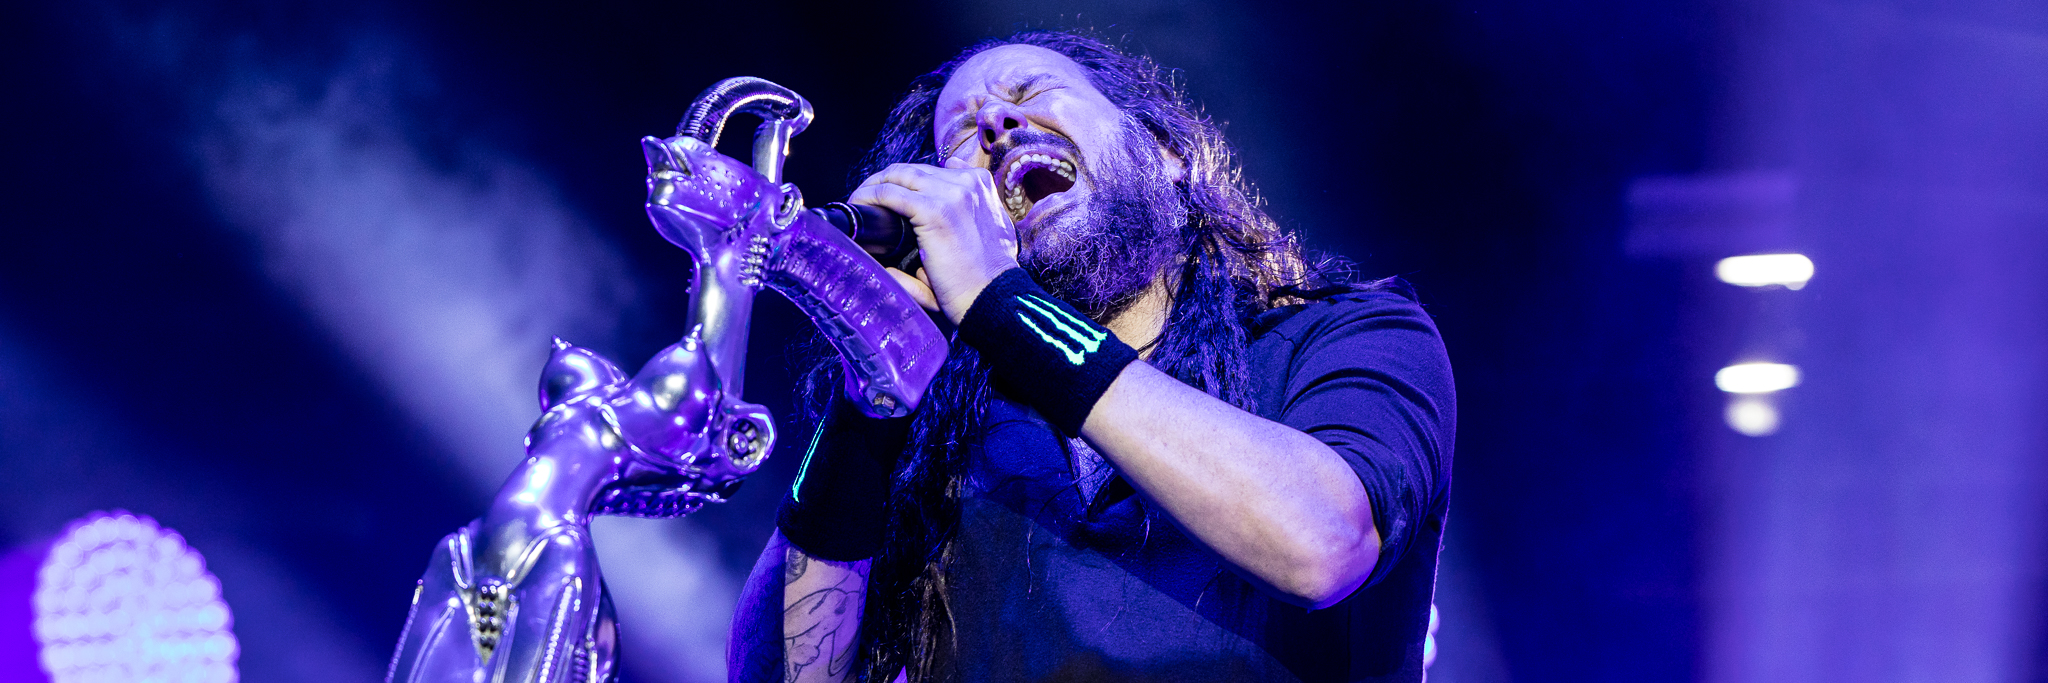 Korn, Stone Sour, Skillet Slay on Serenity of Summer Tour